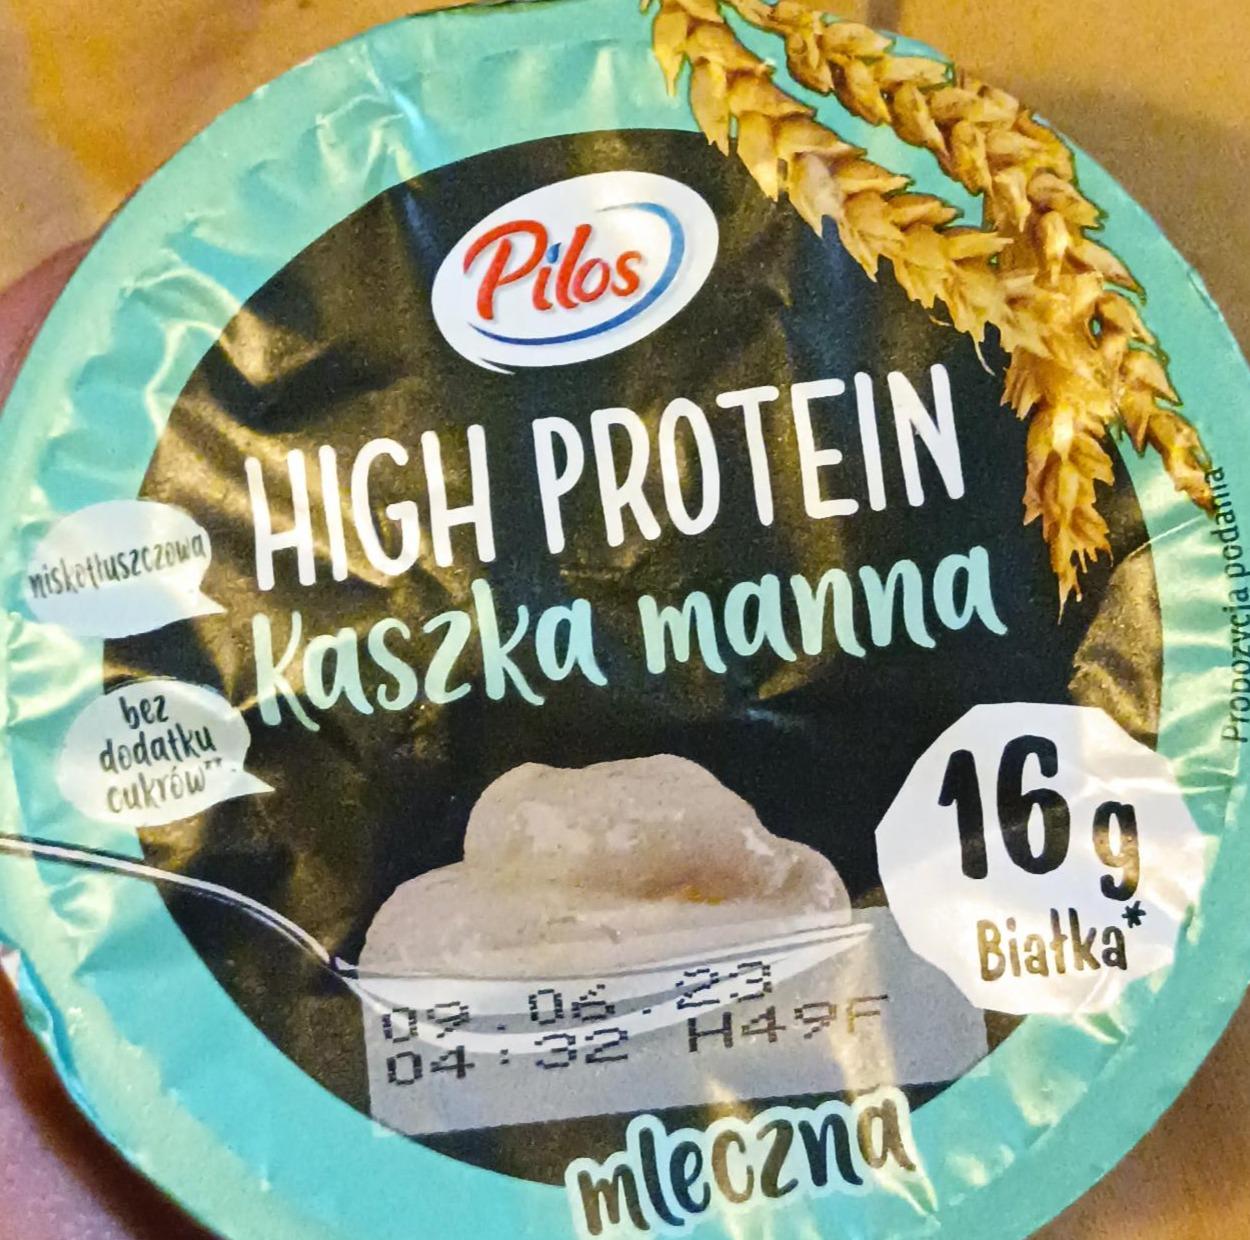 Фото - Каша манна High protein kaszka manna Pilos